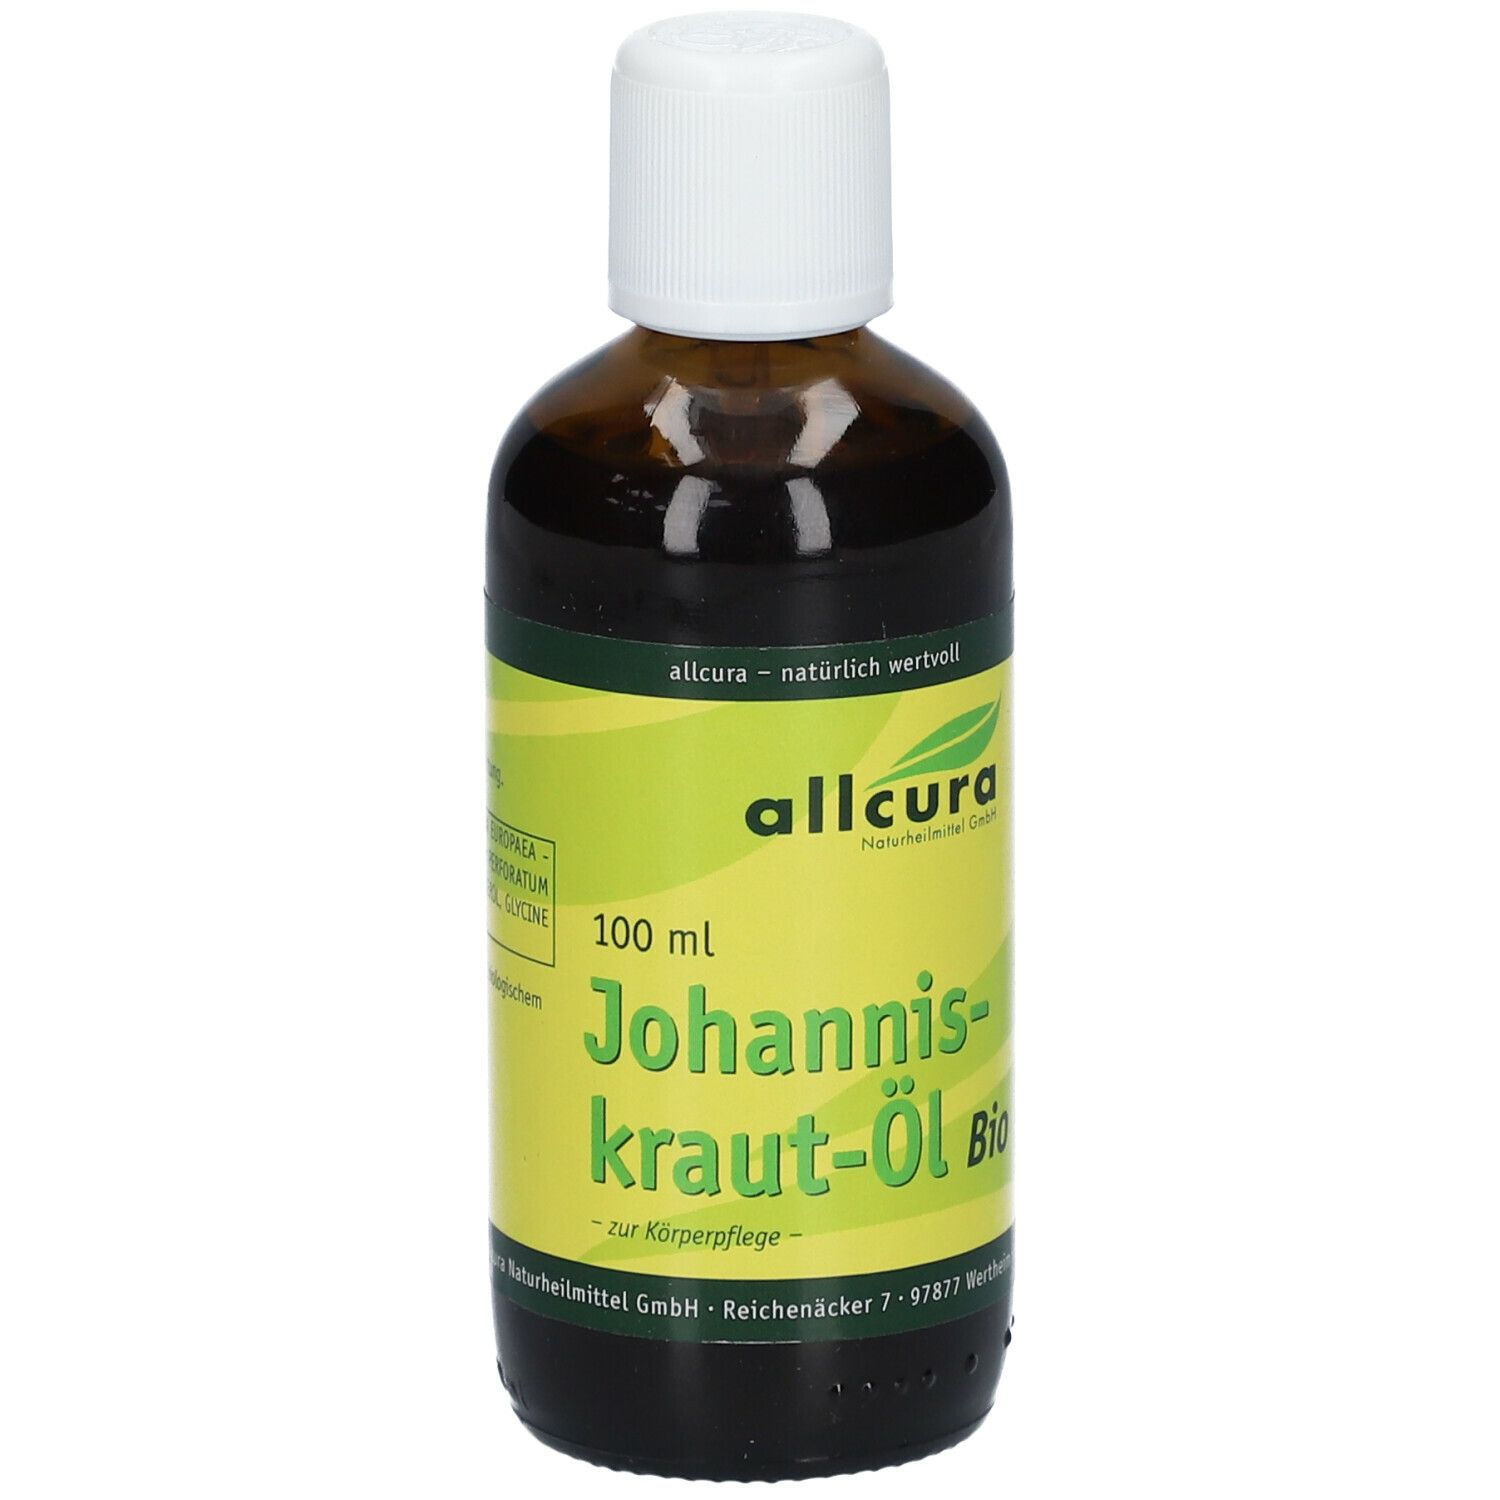 allcura Johanniskraut-Öl Bio